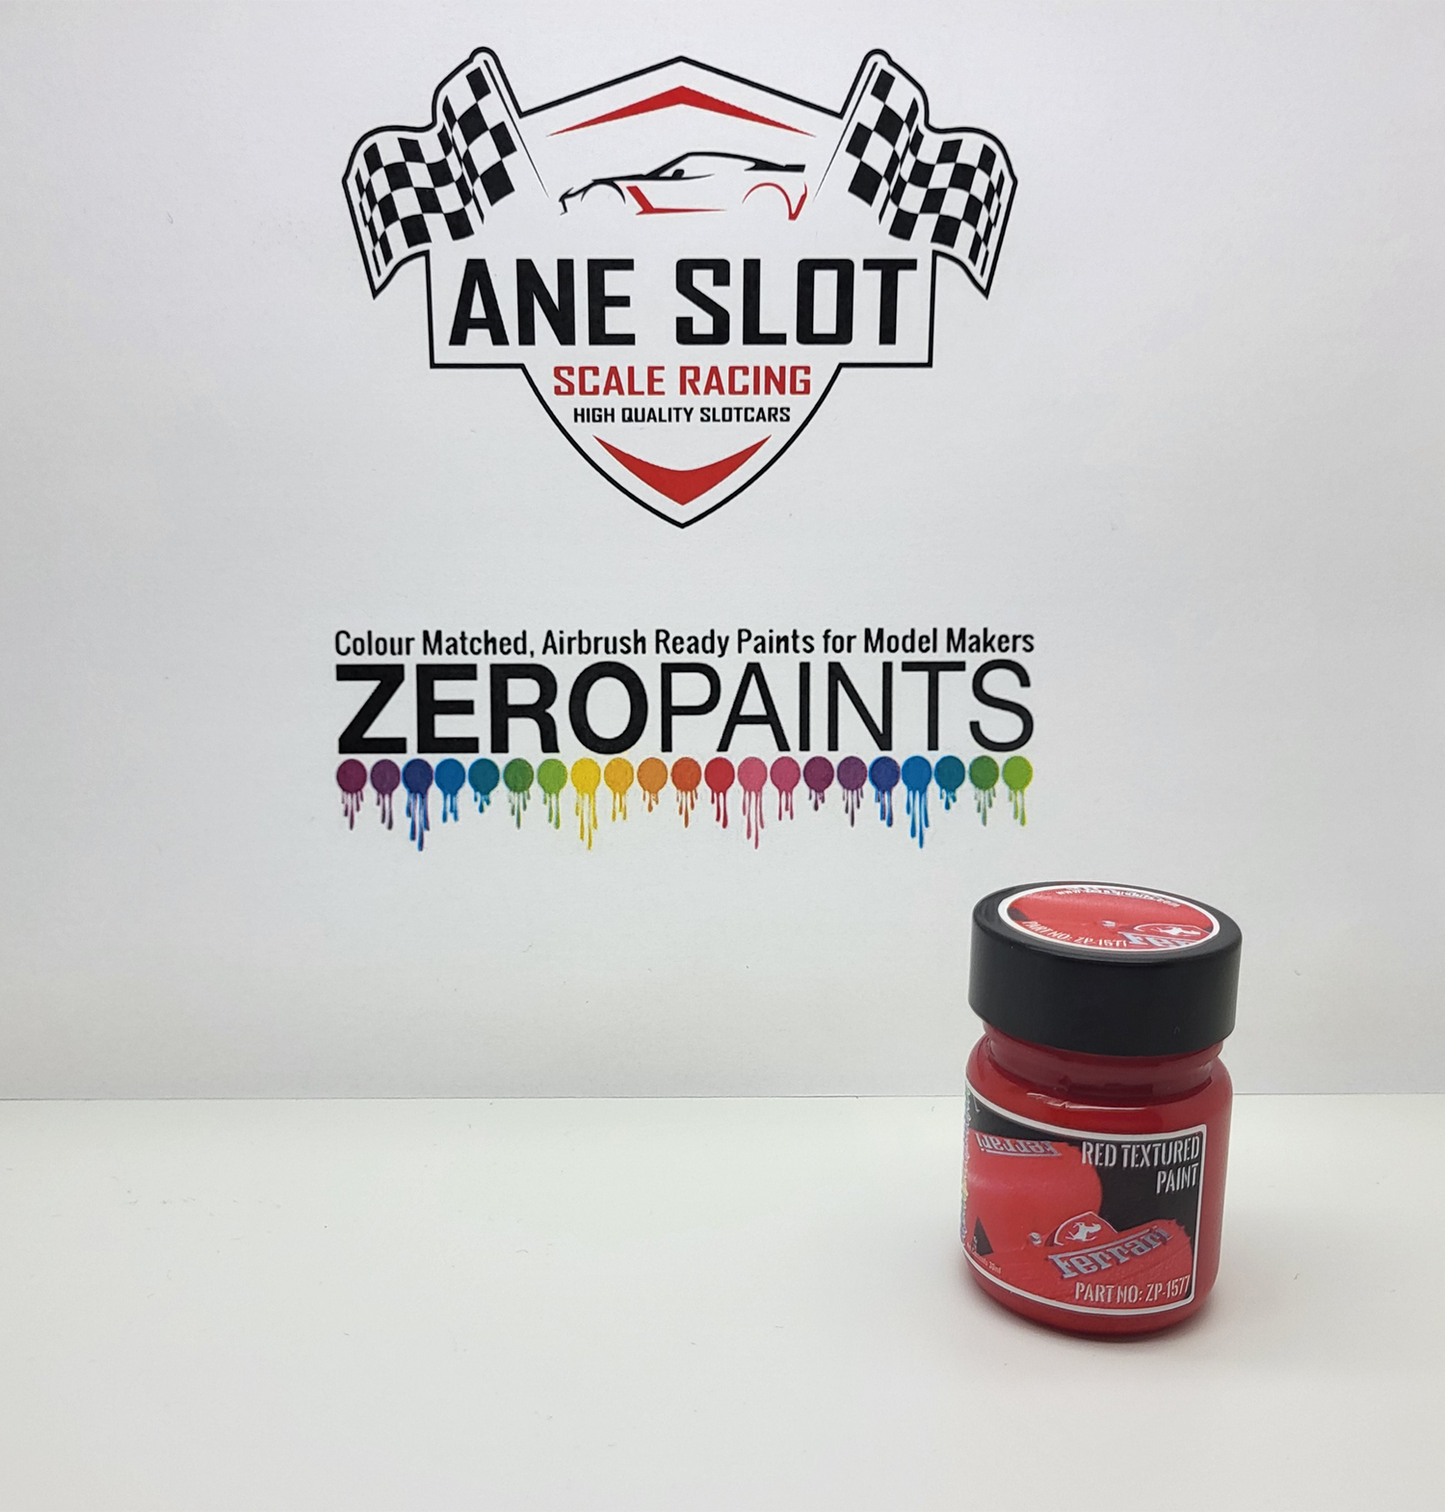 Zeropaints ZP-1577 " Red Textured Paint "